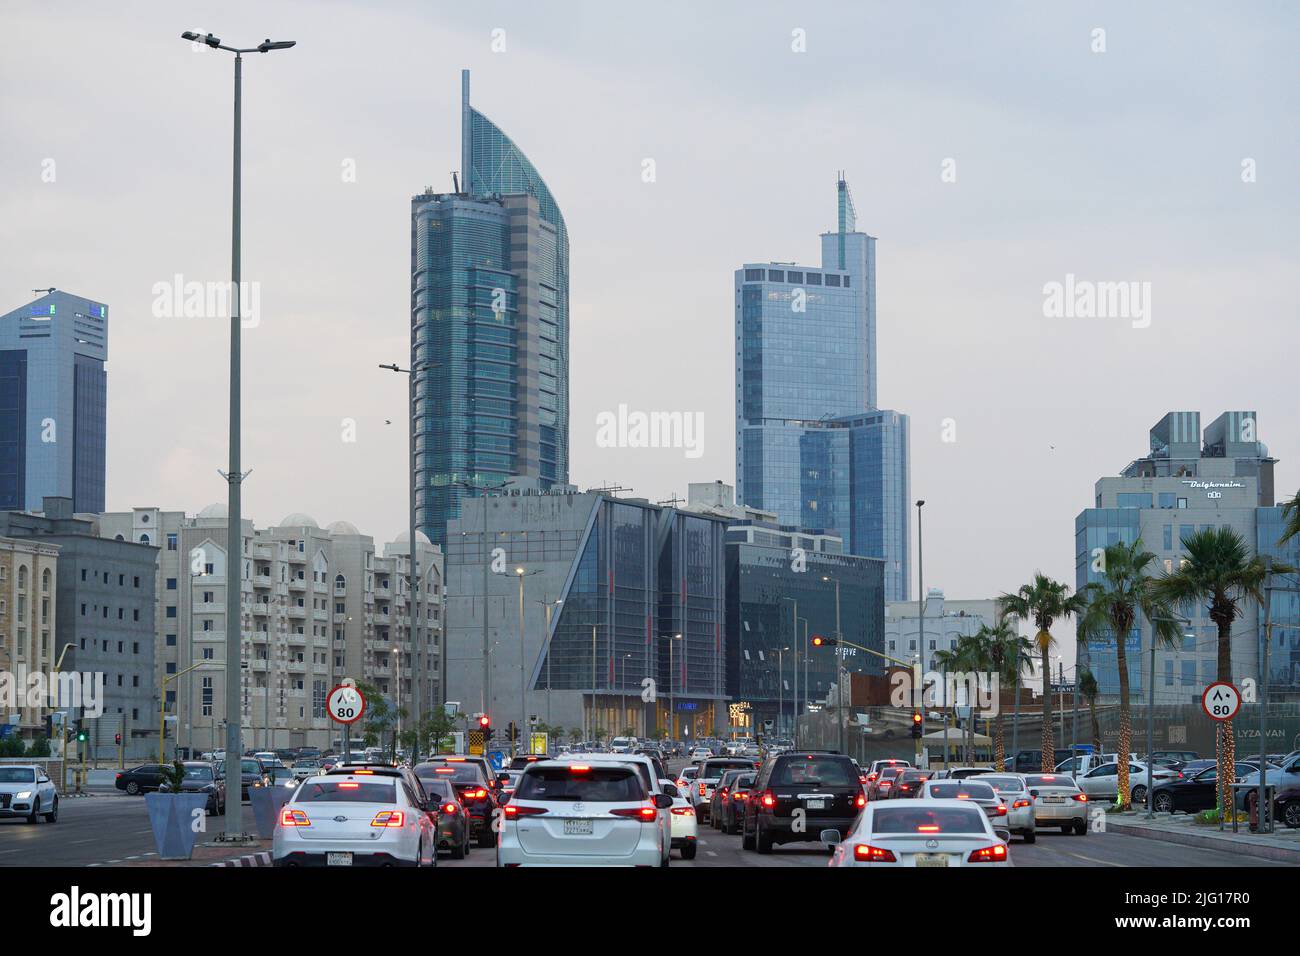 Al Khobar city Morning view from a traffic light. with sky scrapper and construction. City Khobar, Saudi Arabia Stock Photo